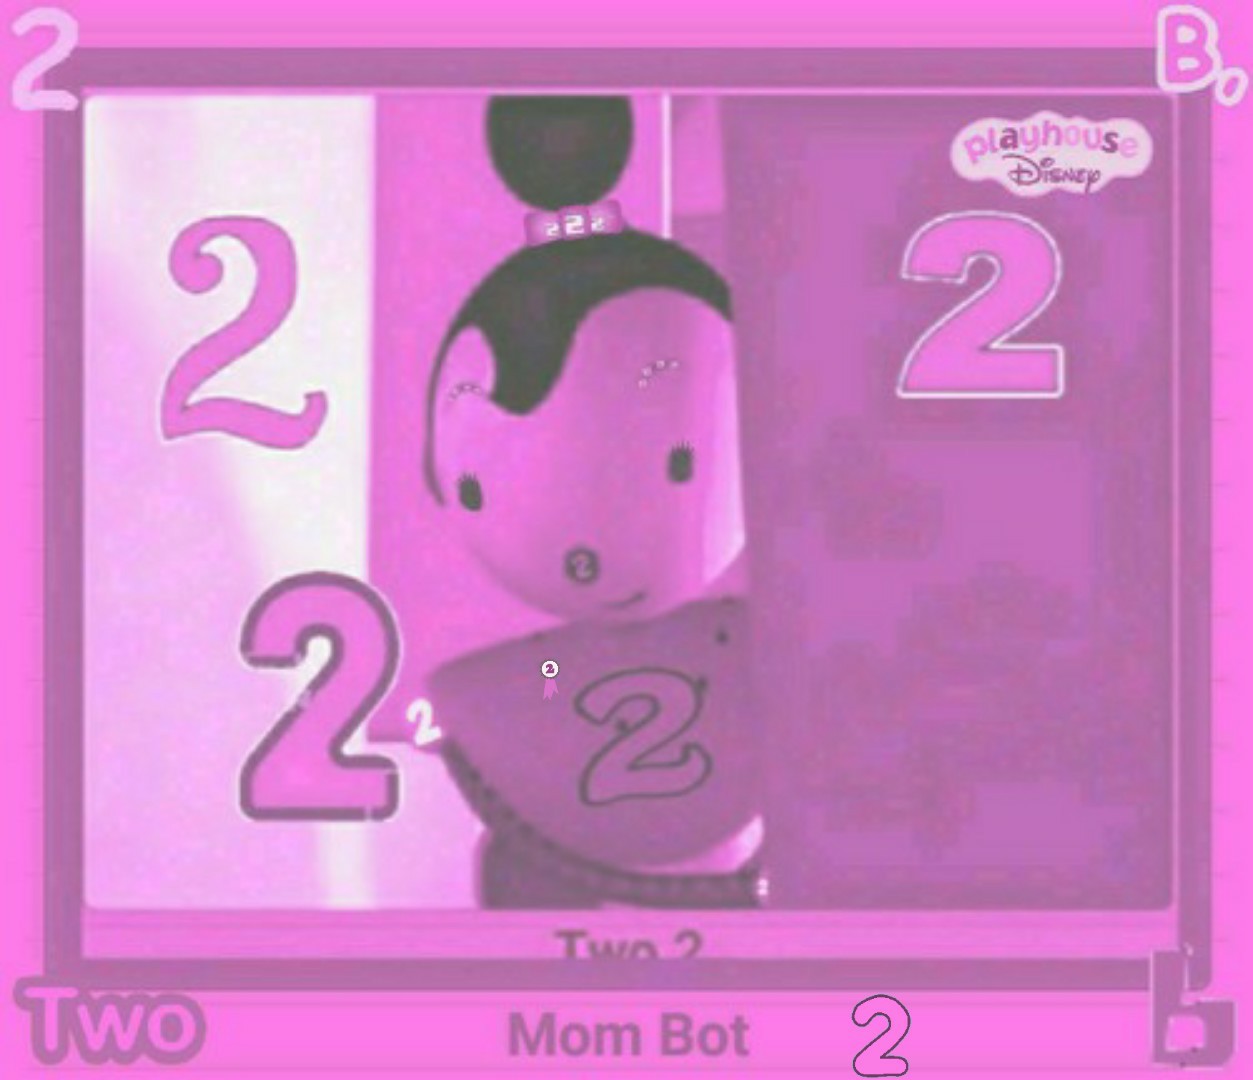 Mom Bot